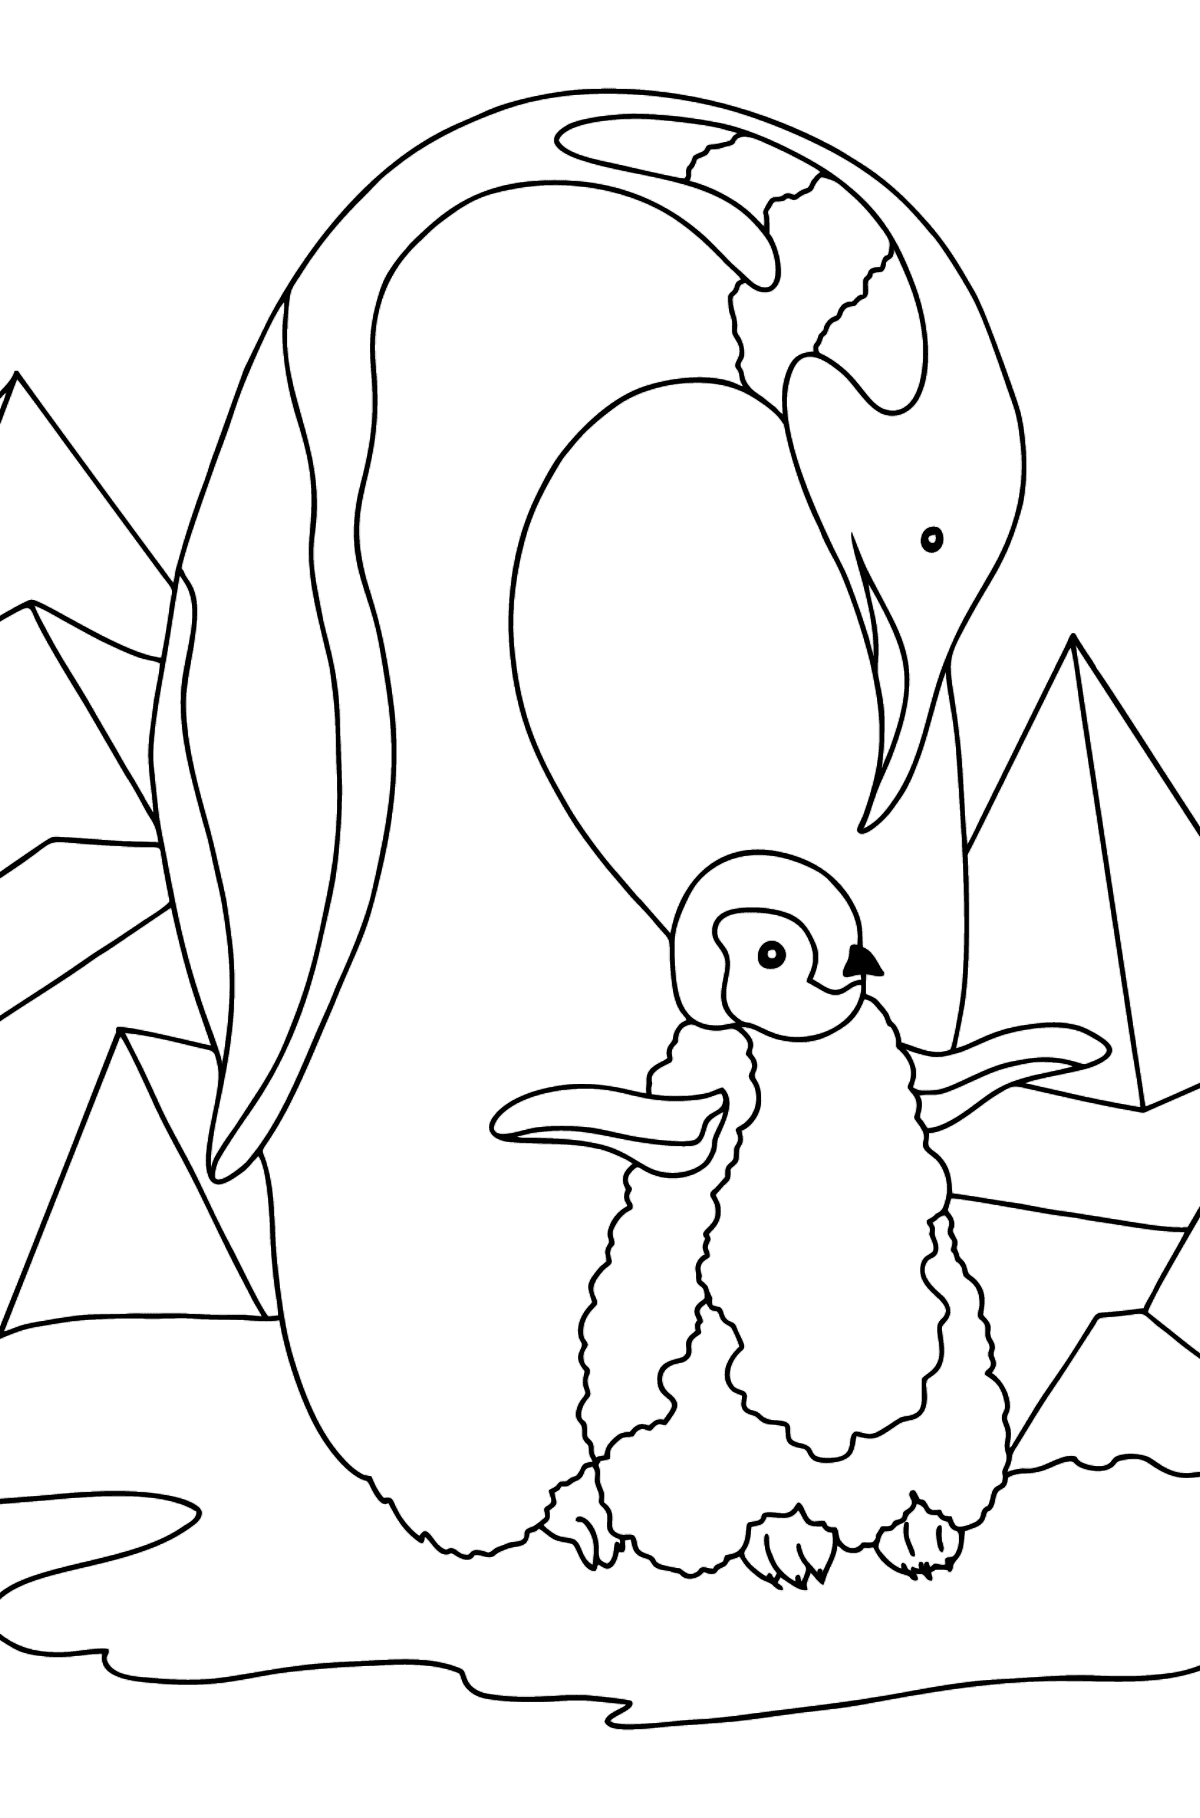 Dibujo para Colorear - Un Pingüino con un Polluelo - Dibujos para Colorear para Niños